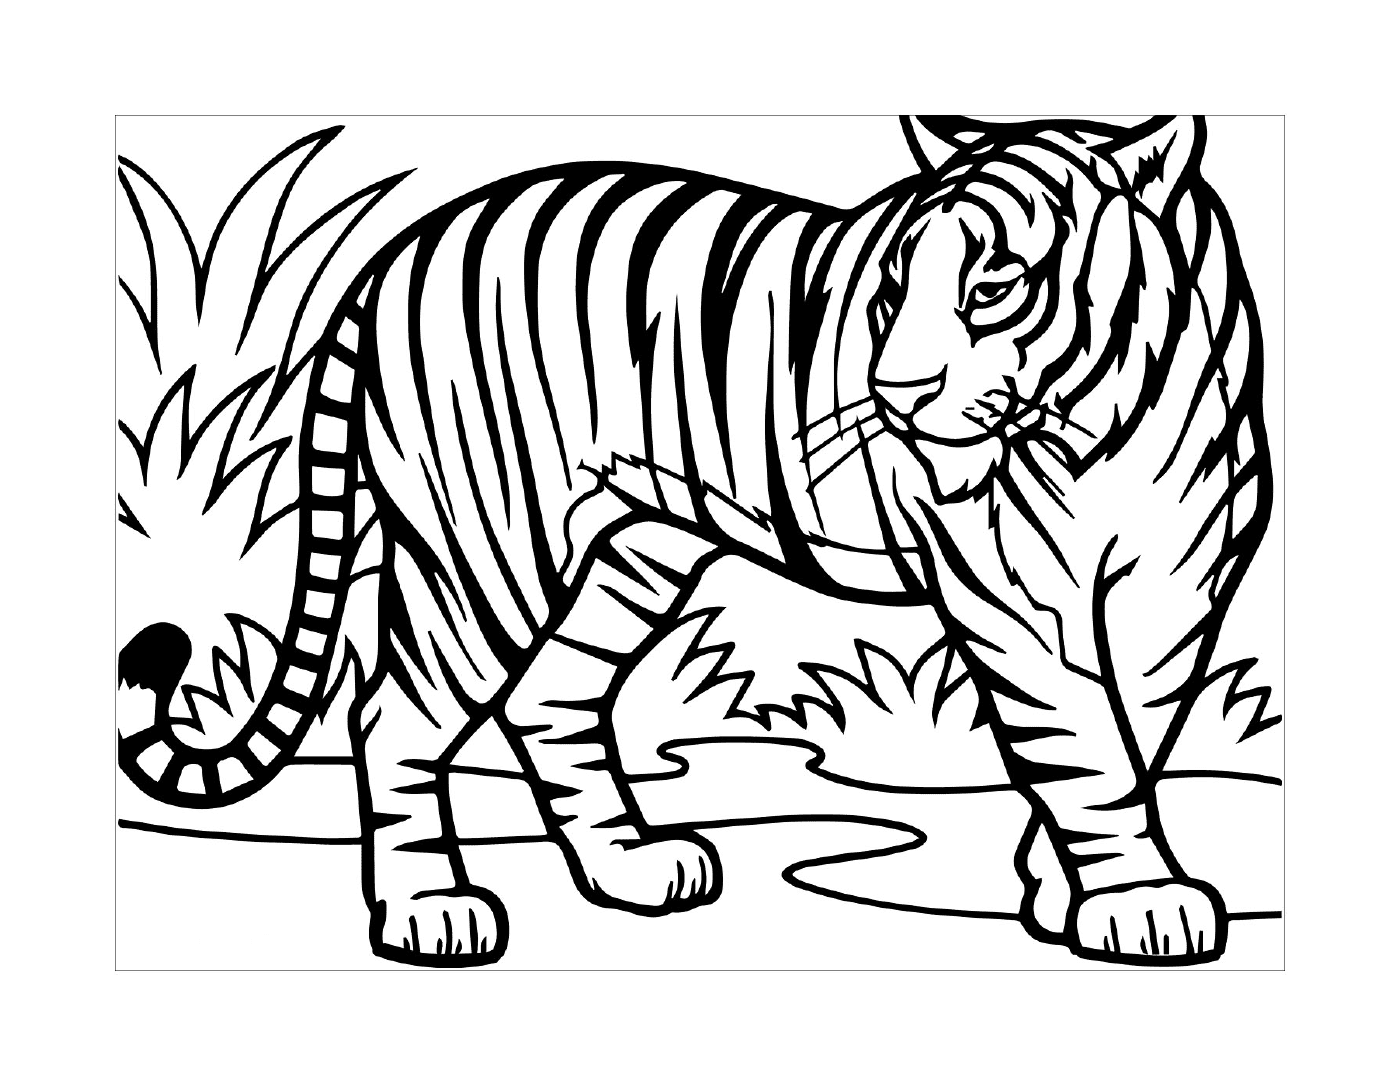   Un tigre marchant 